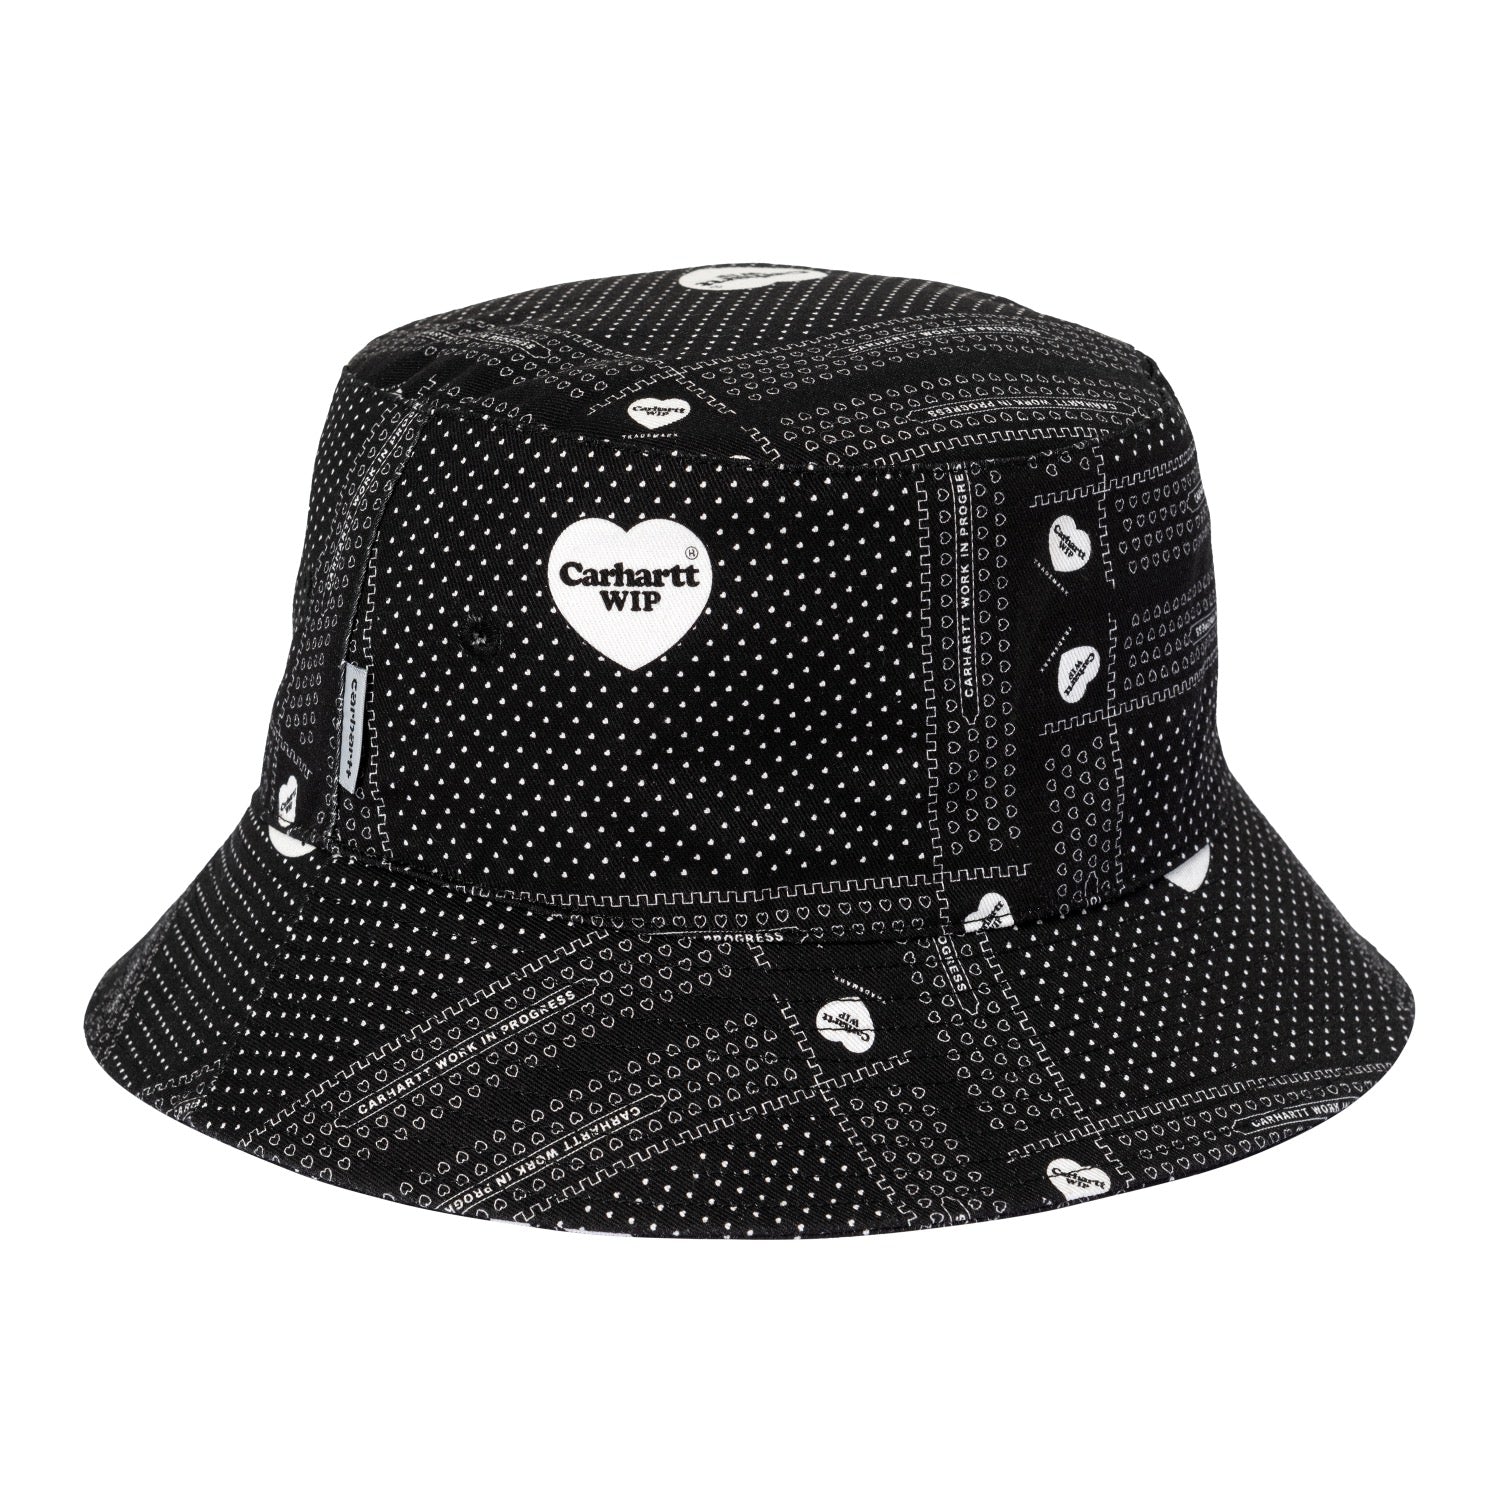 GRAPHIC BUCKET HAT - Heart Bandana AOP, Black